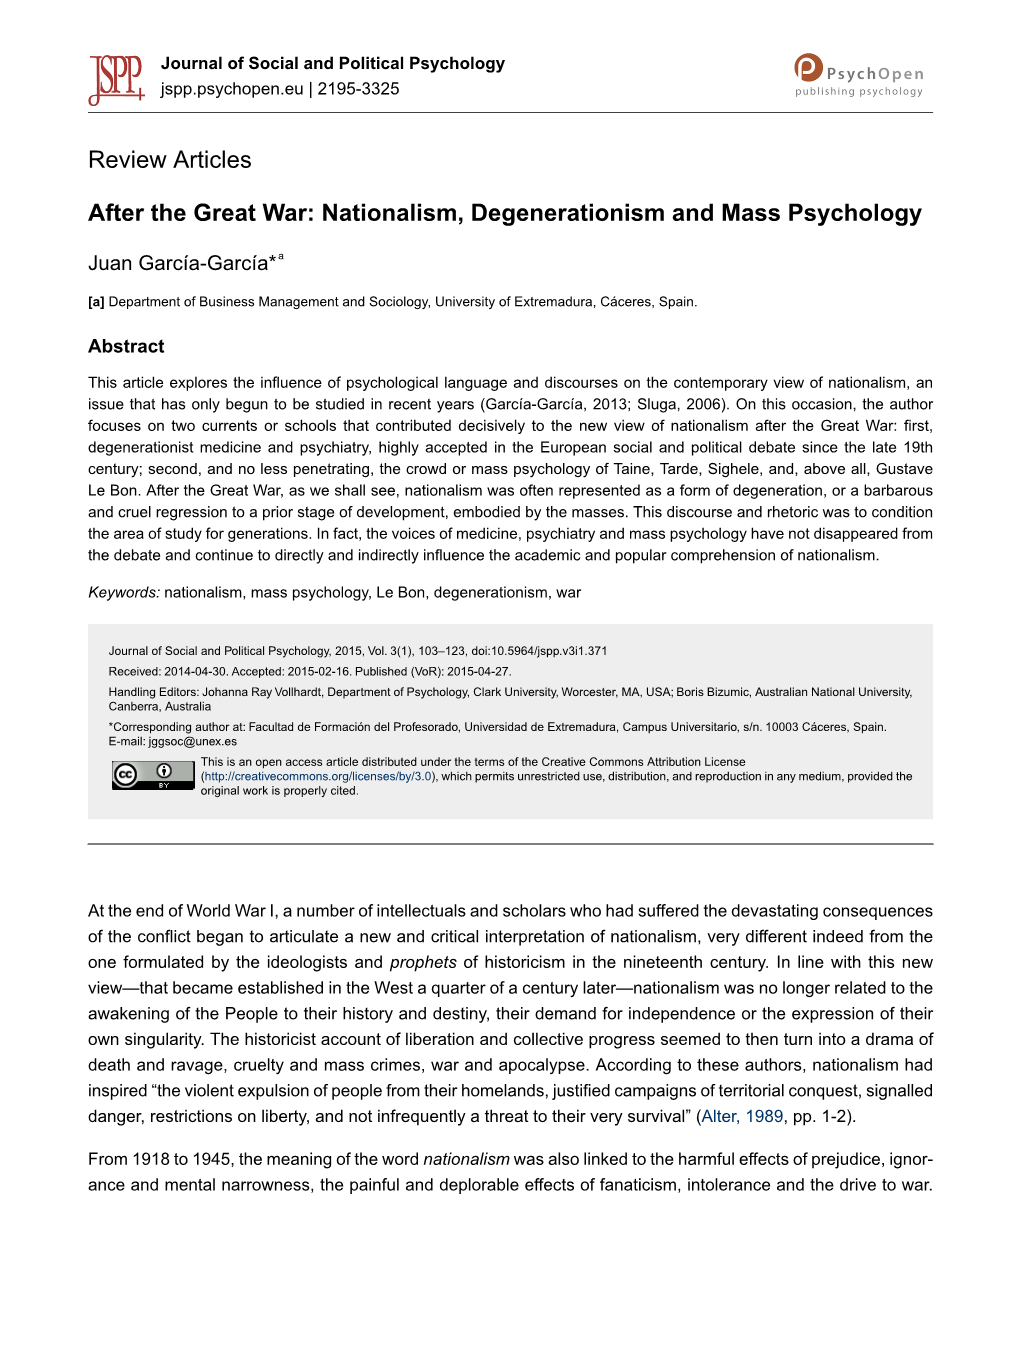 Nationalism, Degenerationism and Mass Psychology